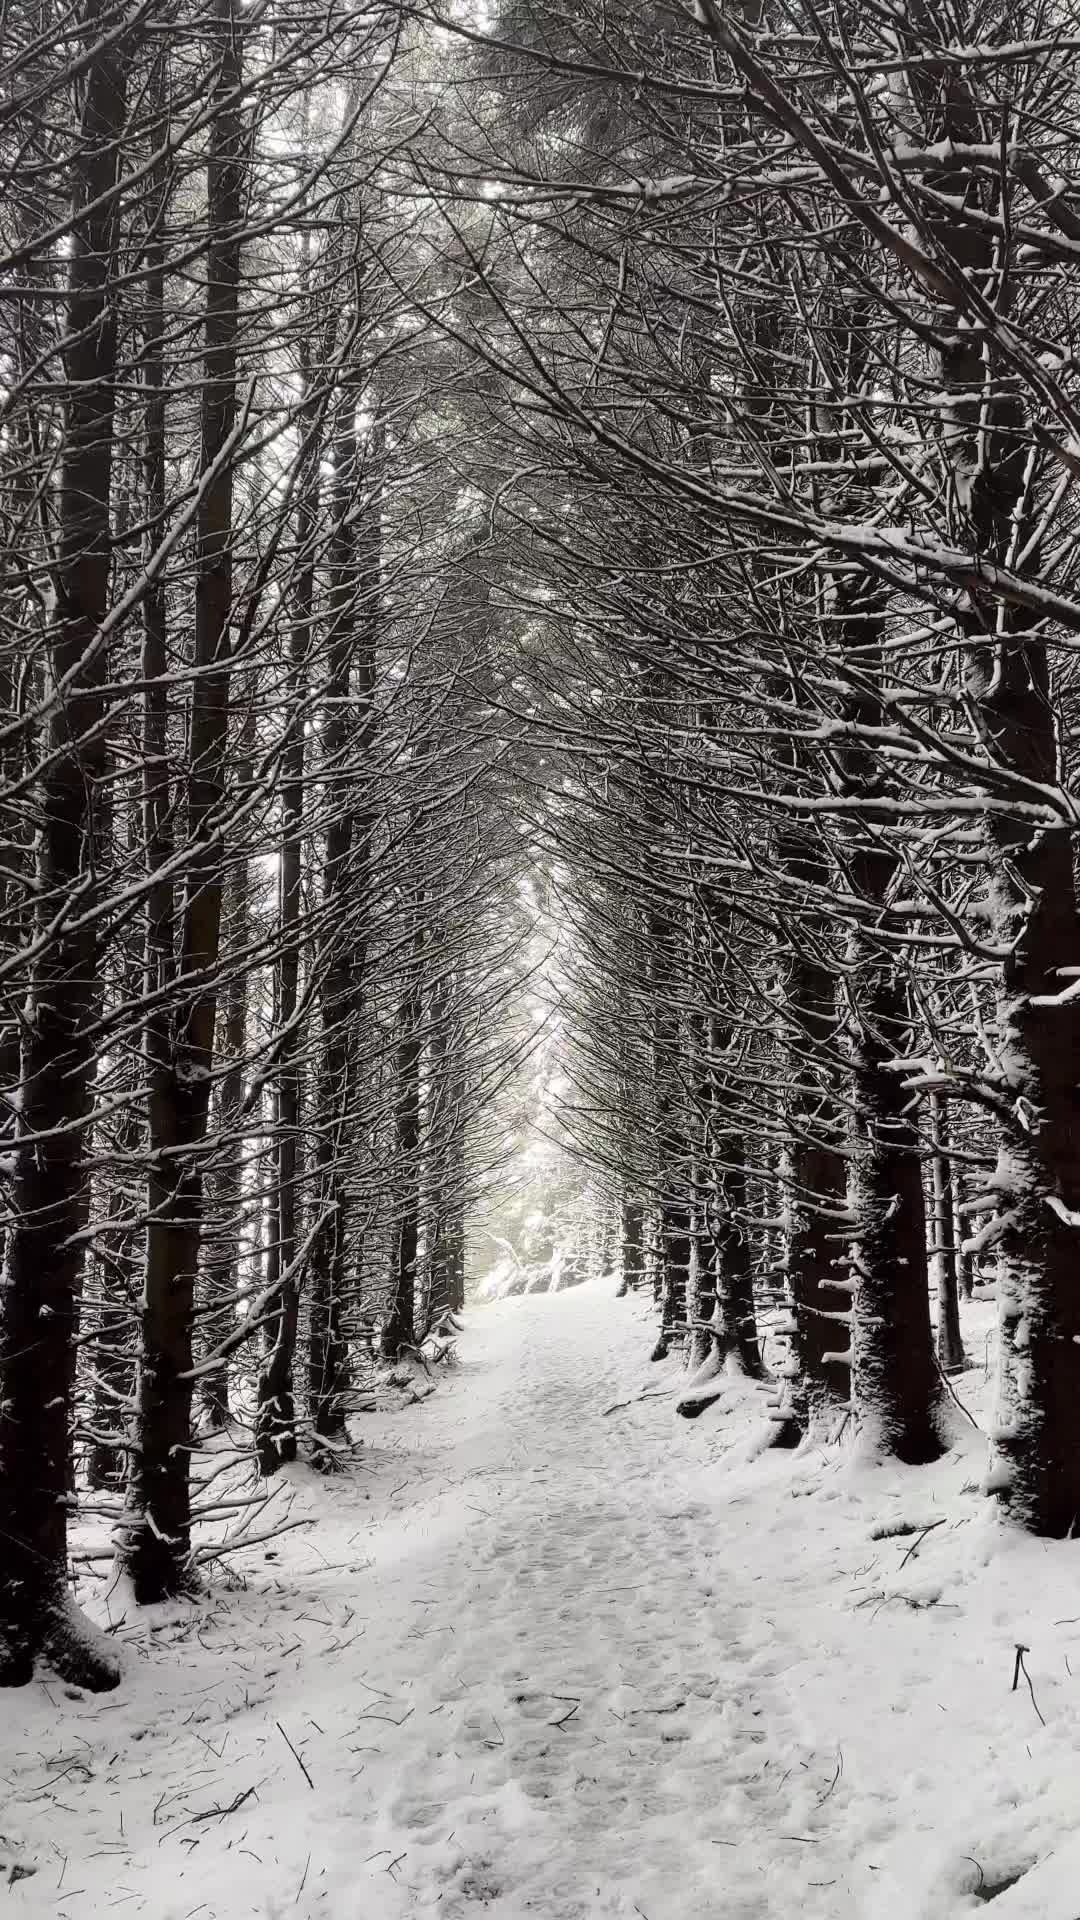 Winter Wonderland at Ballinastoe Woods, Ireland ❄️